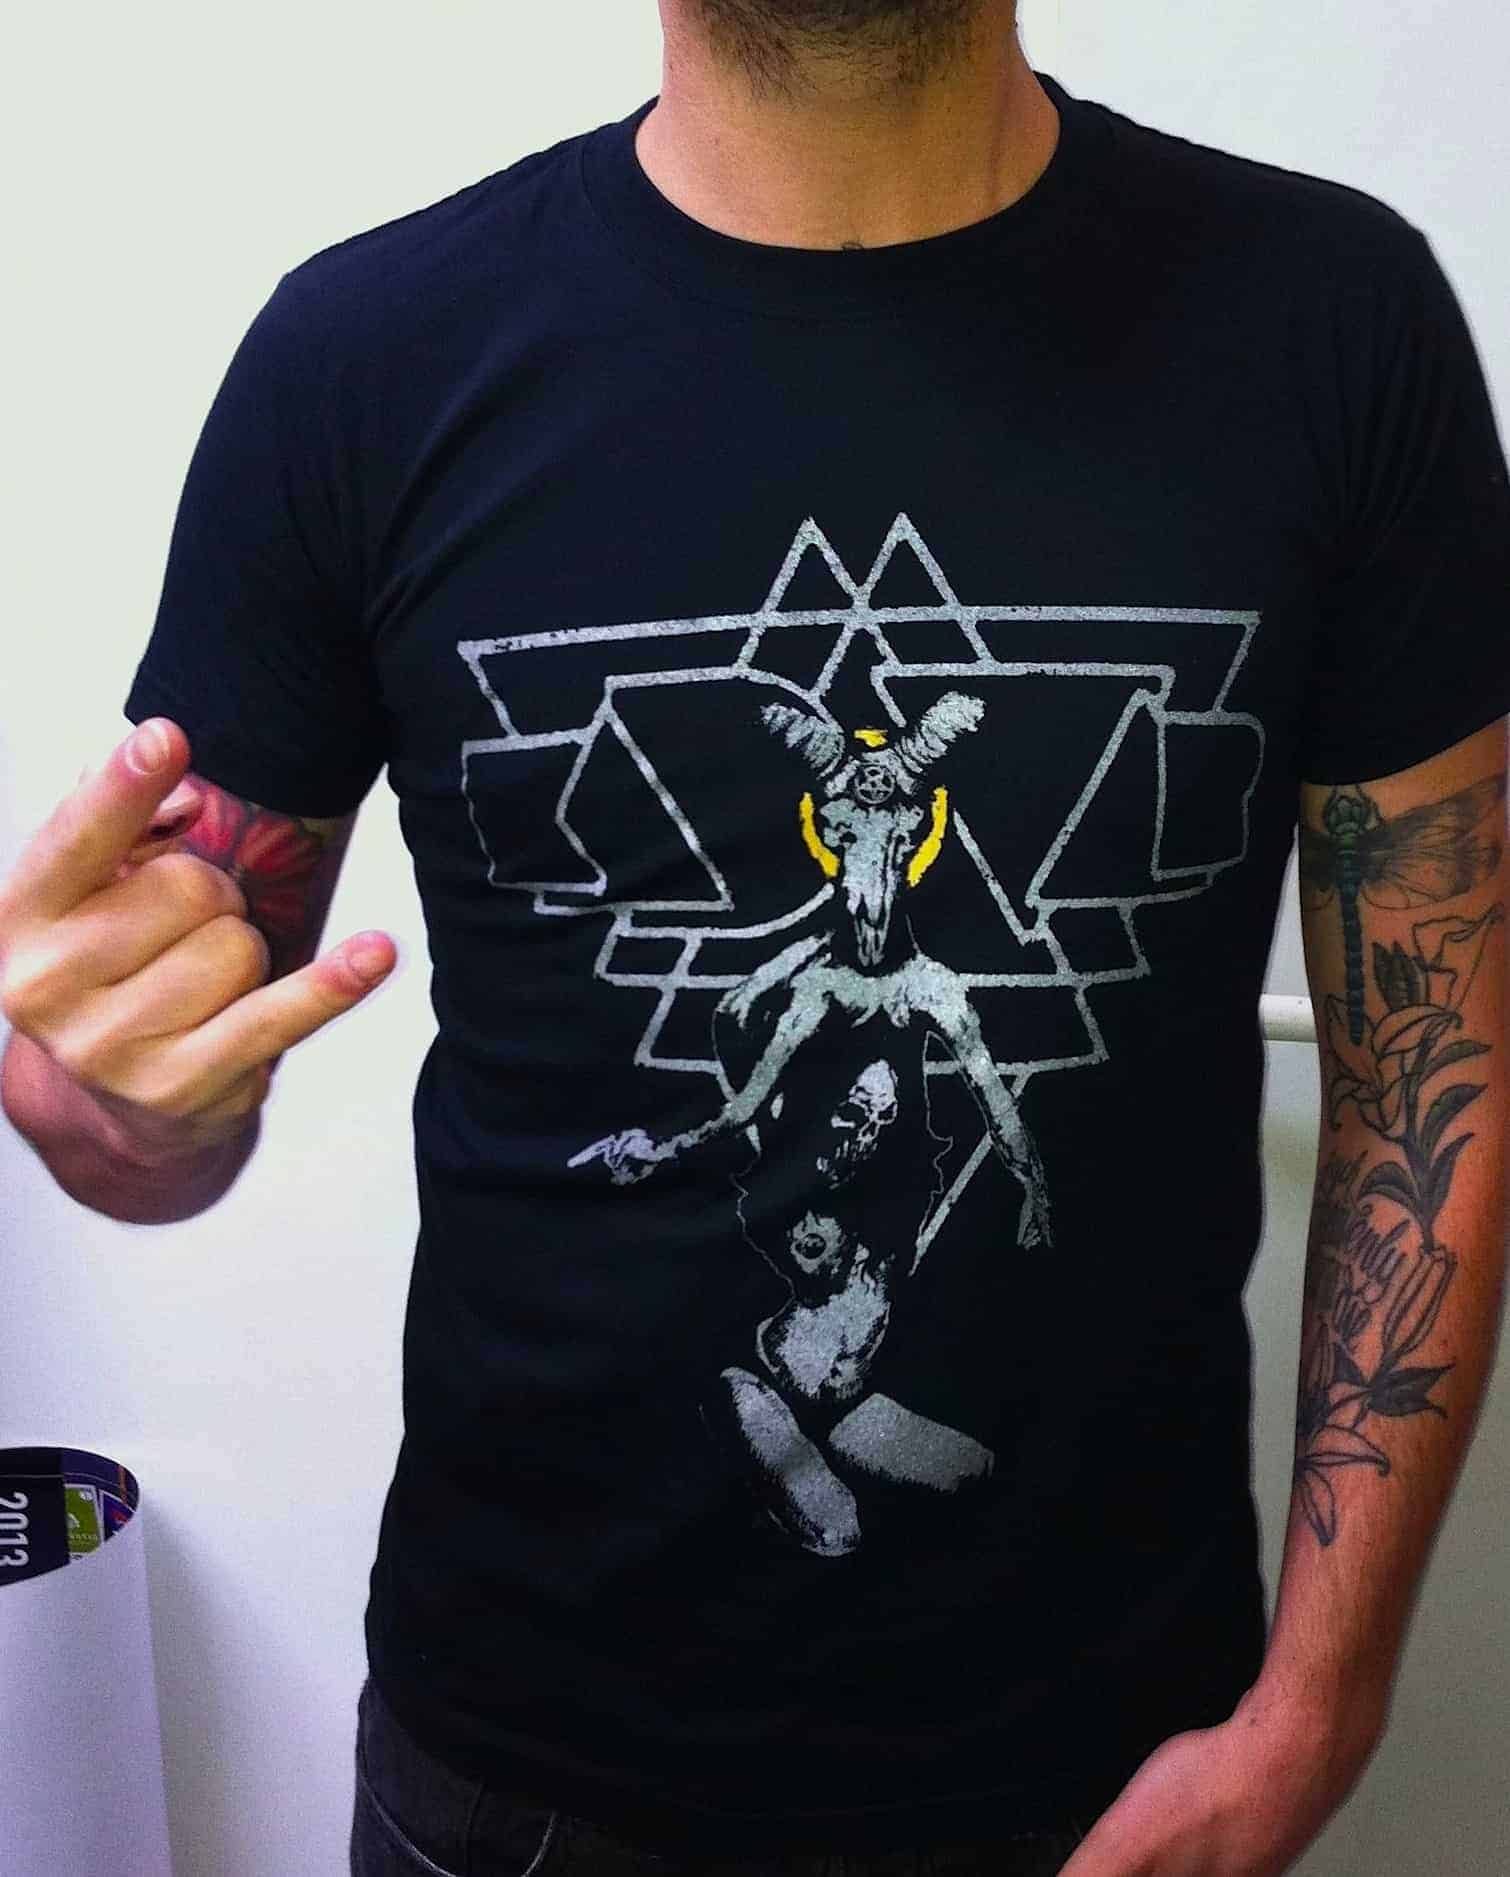 Kadavar – Bathory Shirt Designed by Toni Union Of Sleep, silver/yellow ink silkscreened on black shirt!